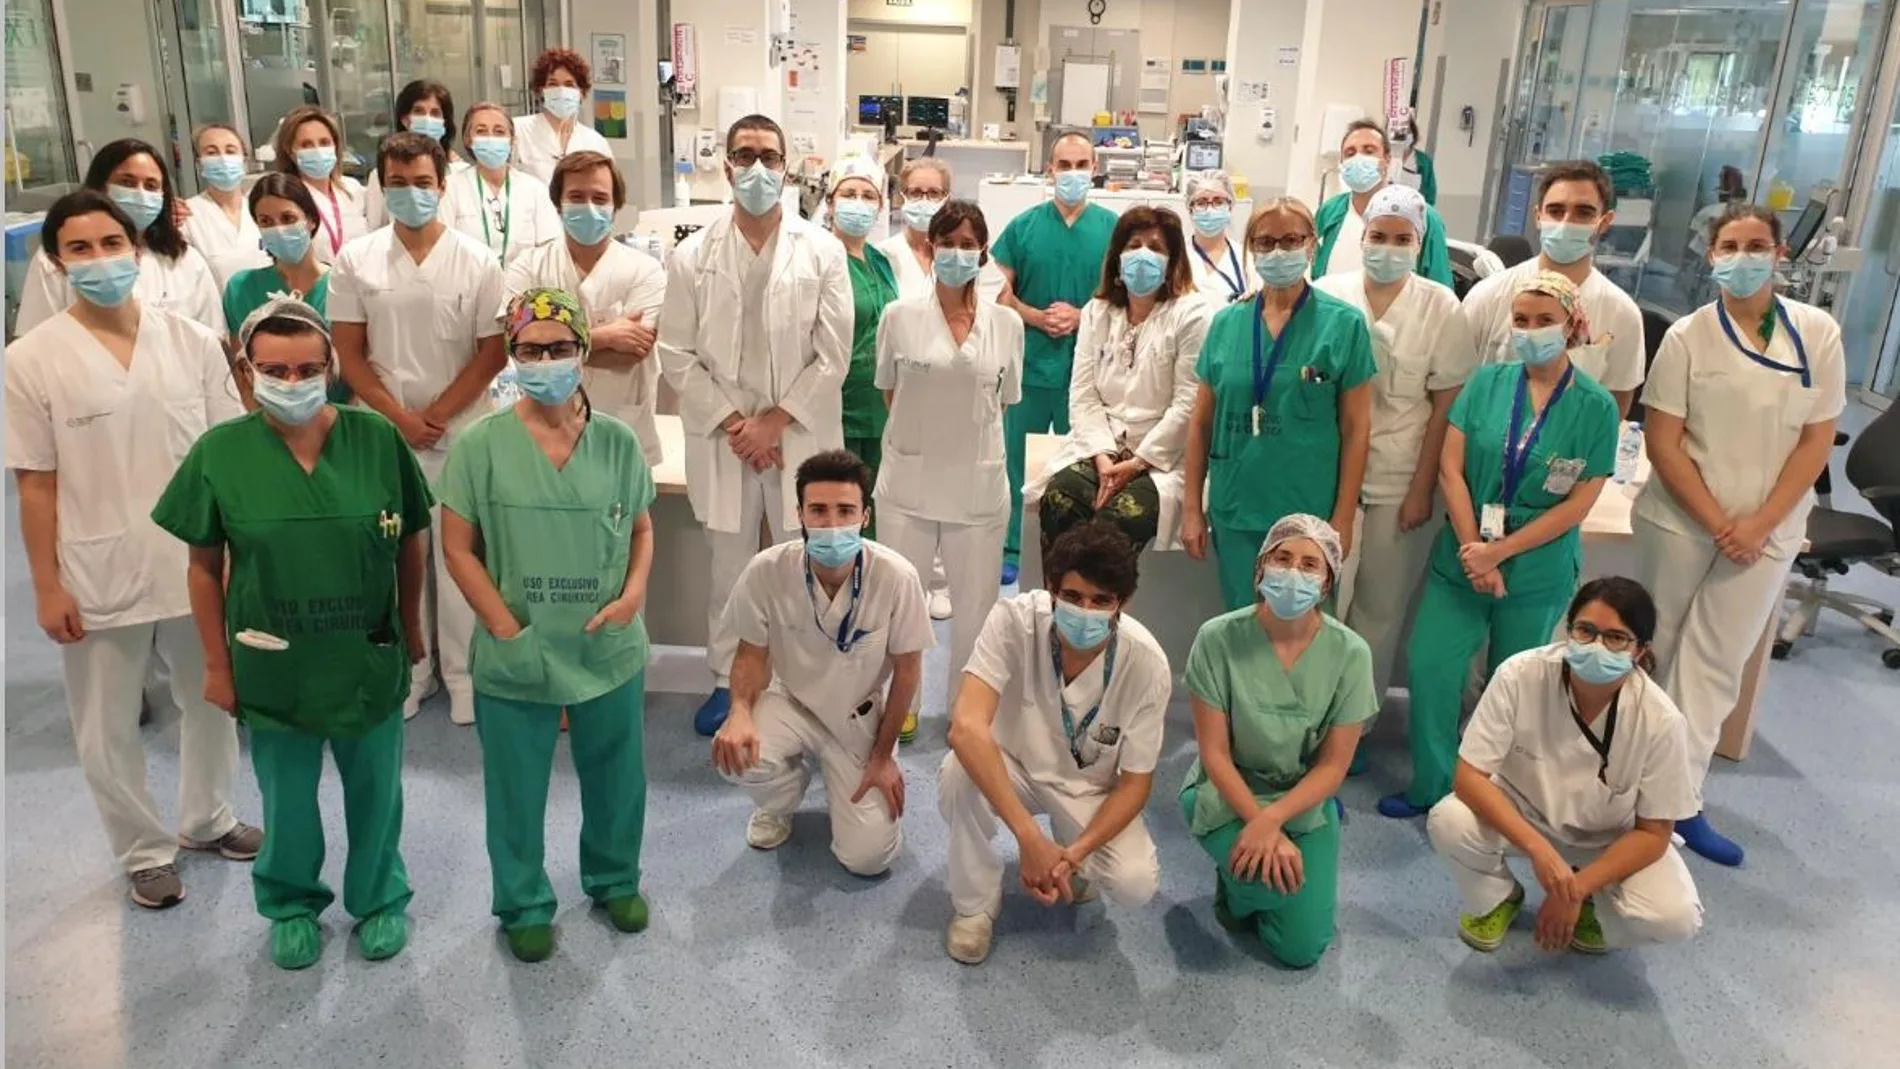 El equipo del Hospital Álvaro Cunqueiro